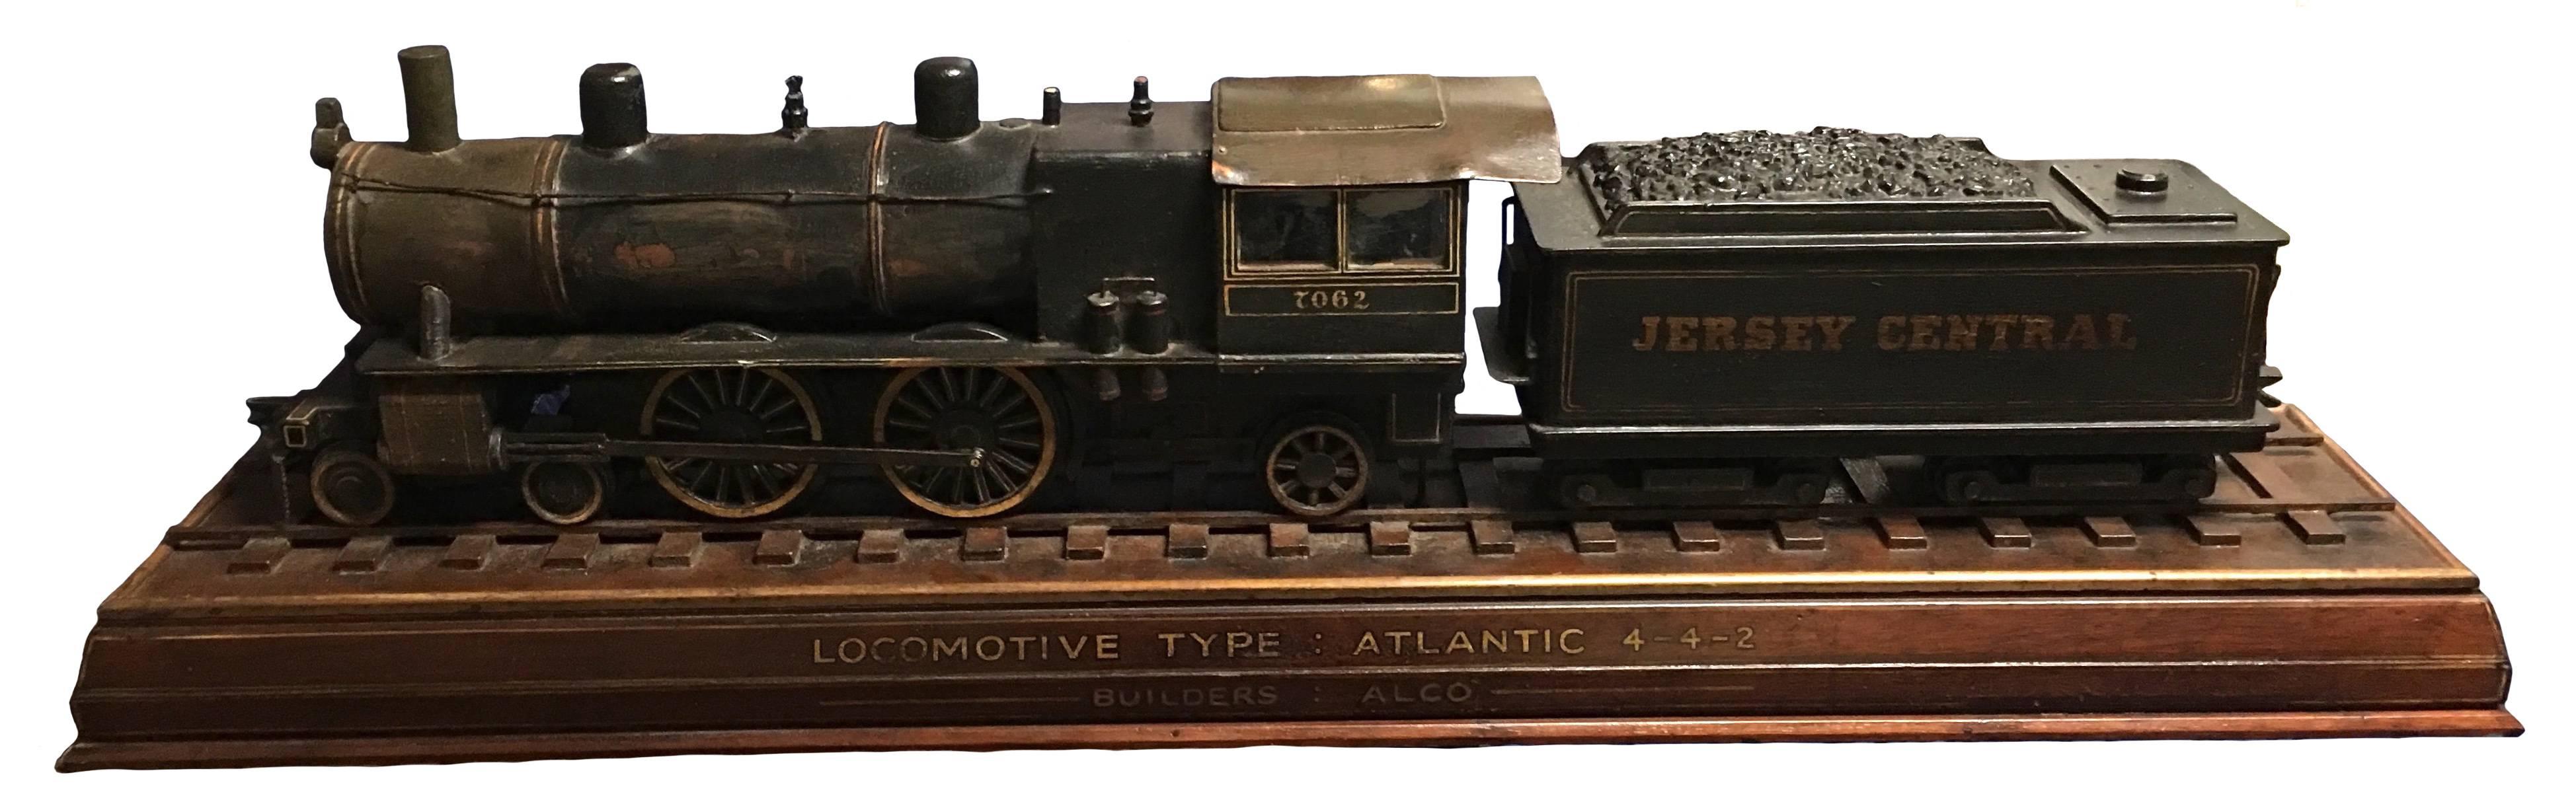 John Elder Jersey Central Railroad 1939 World's Fair Model Train 2